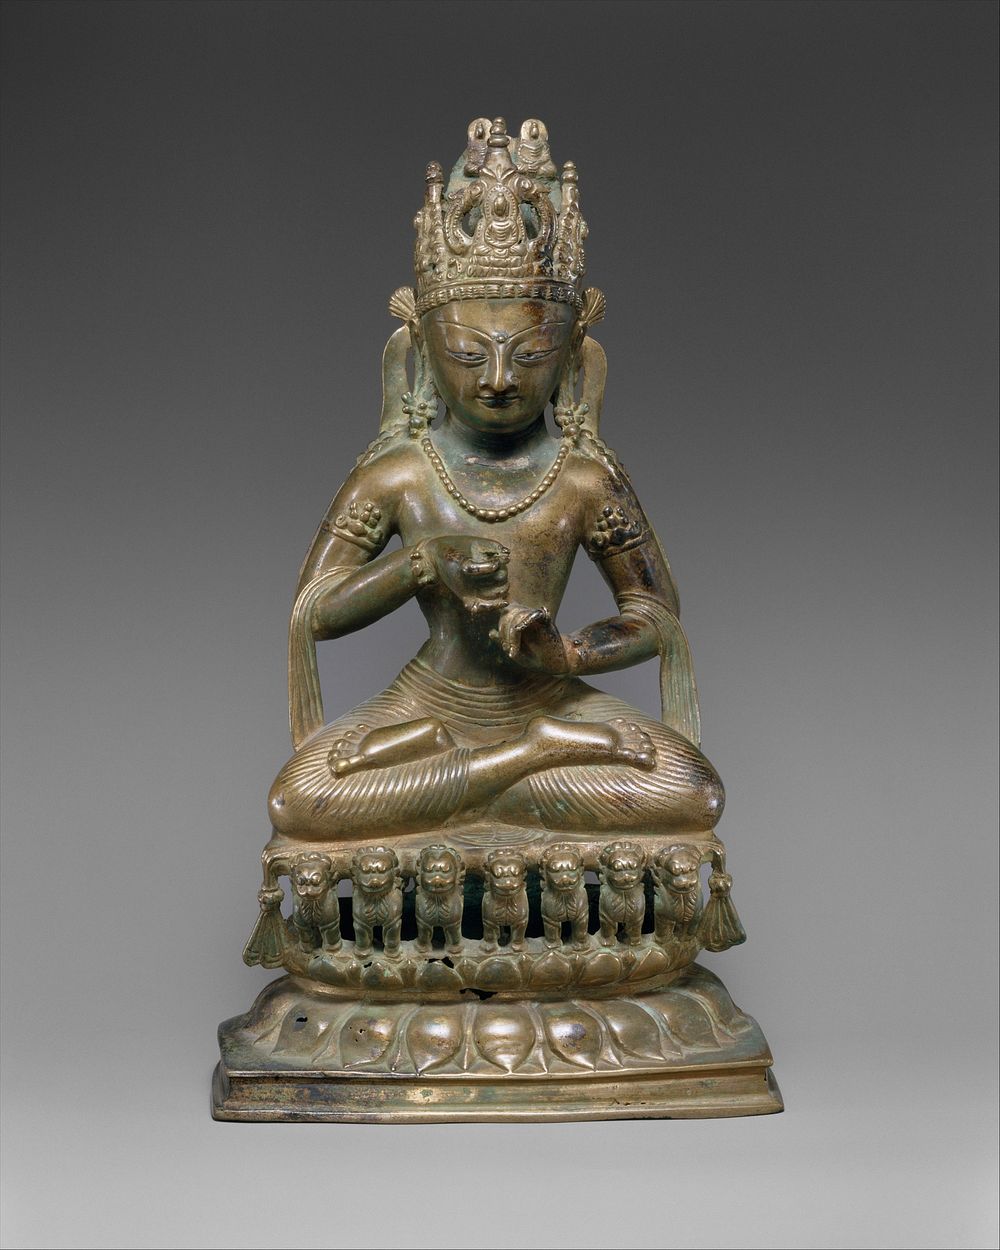 Vairochana, the Transcendent Buddha of the Center